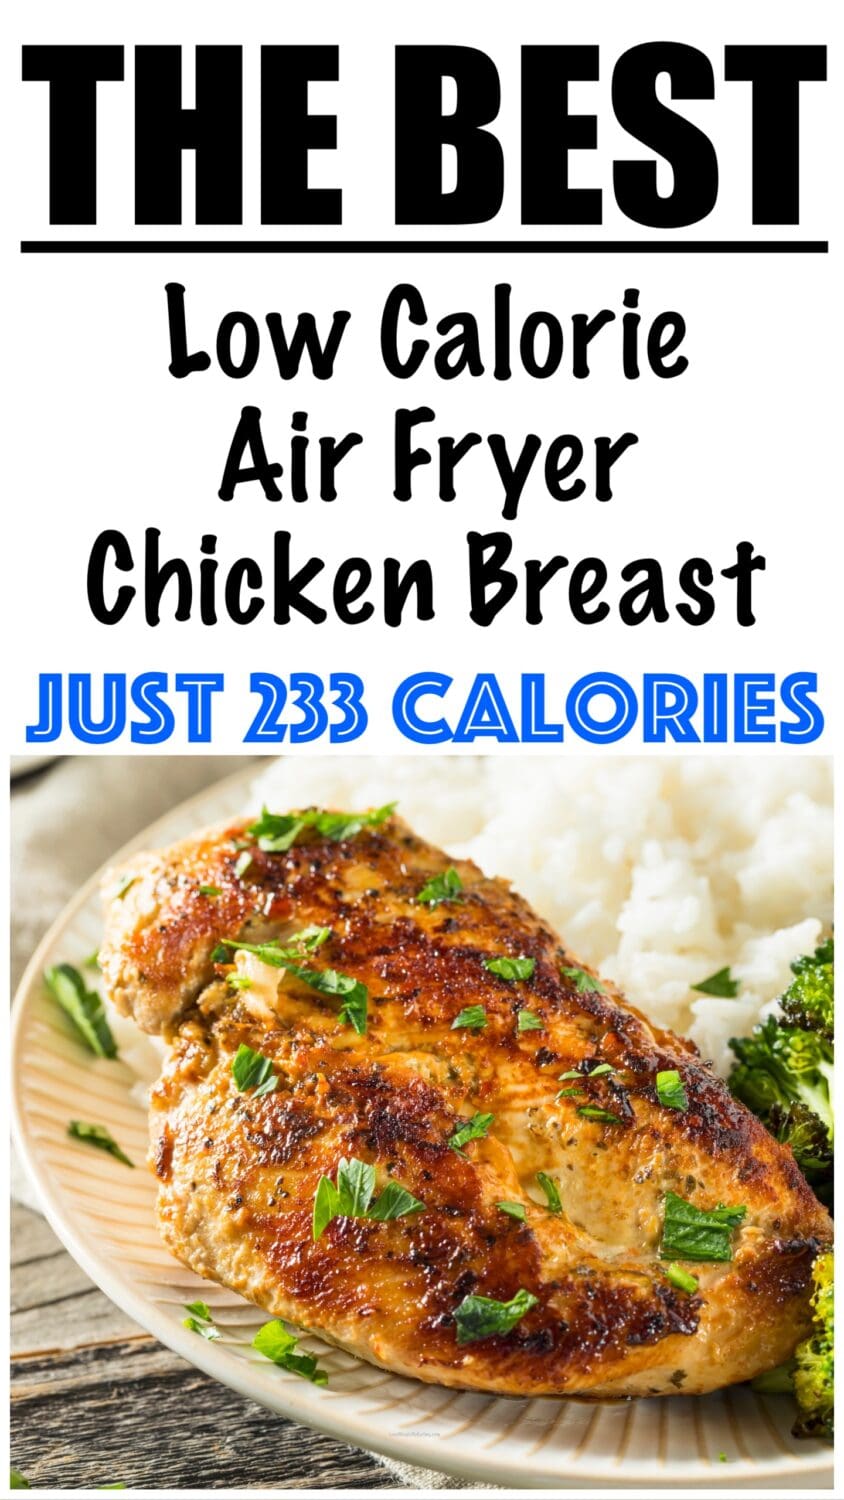 Low Calorie Air Fryer Chicken Breast